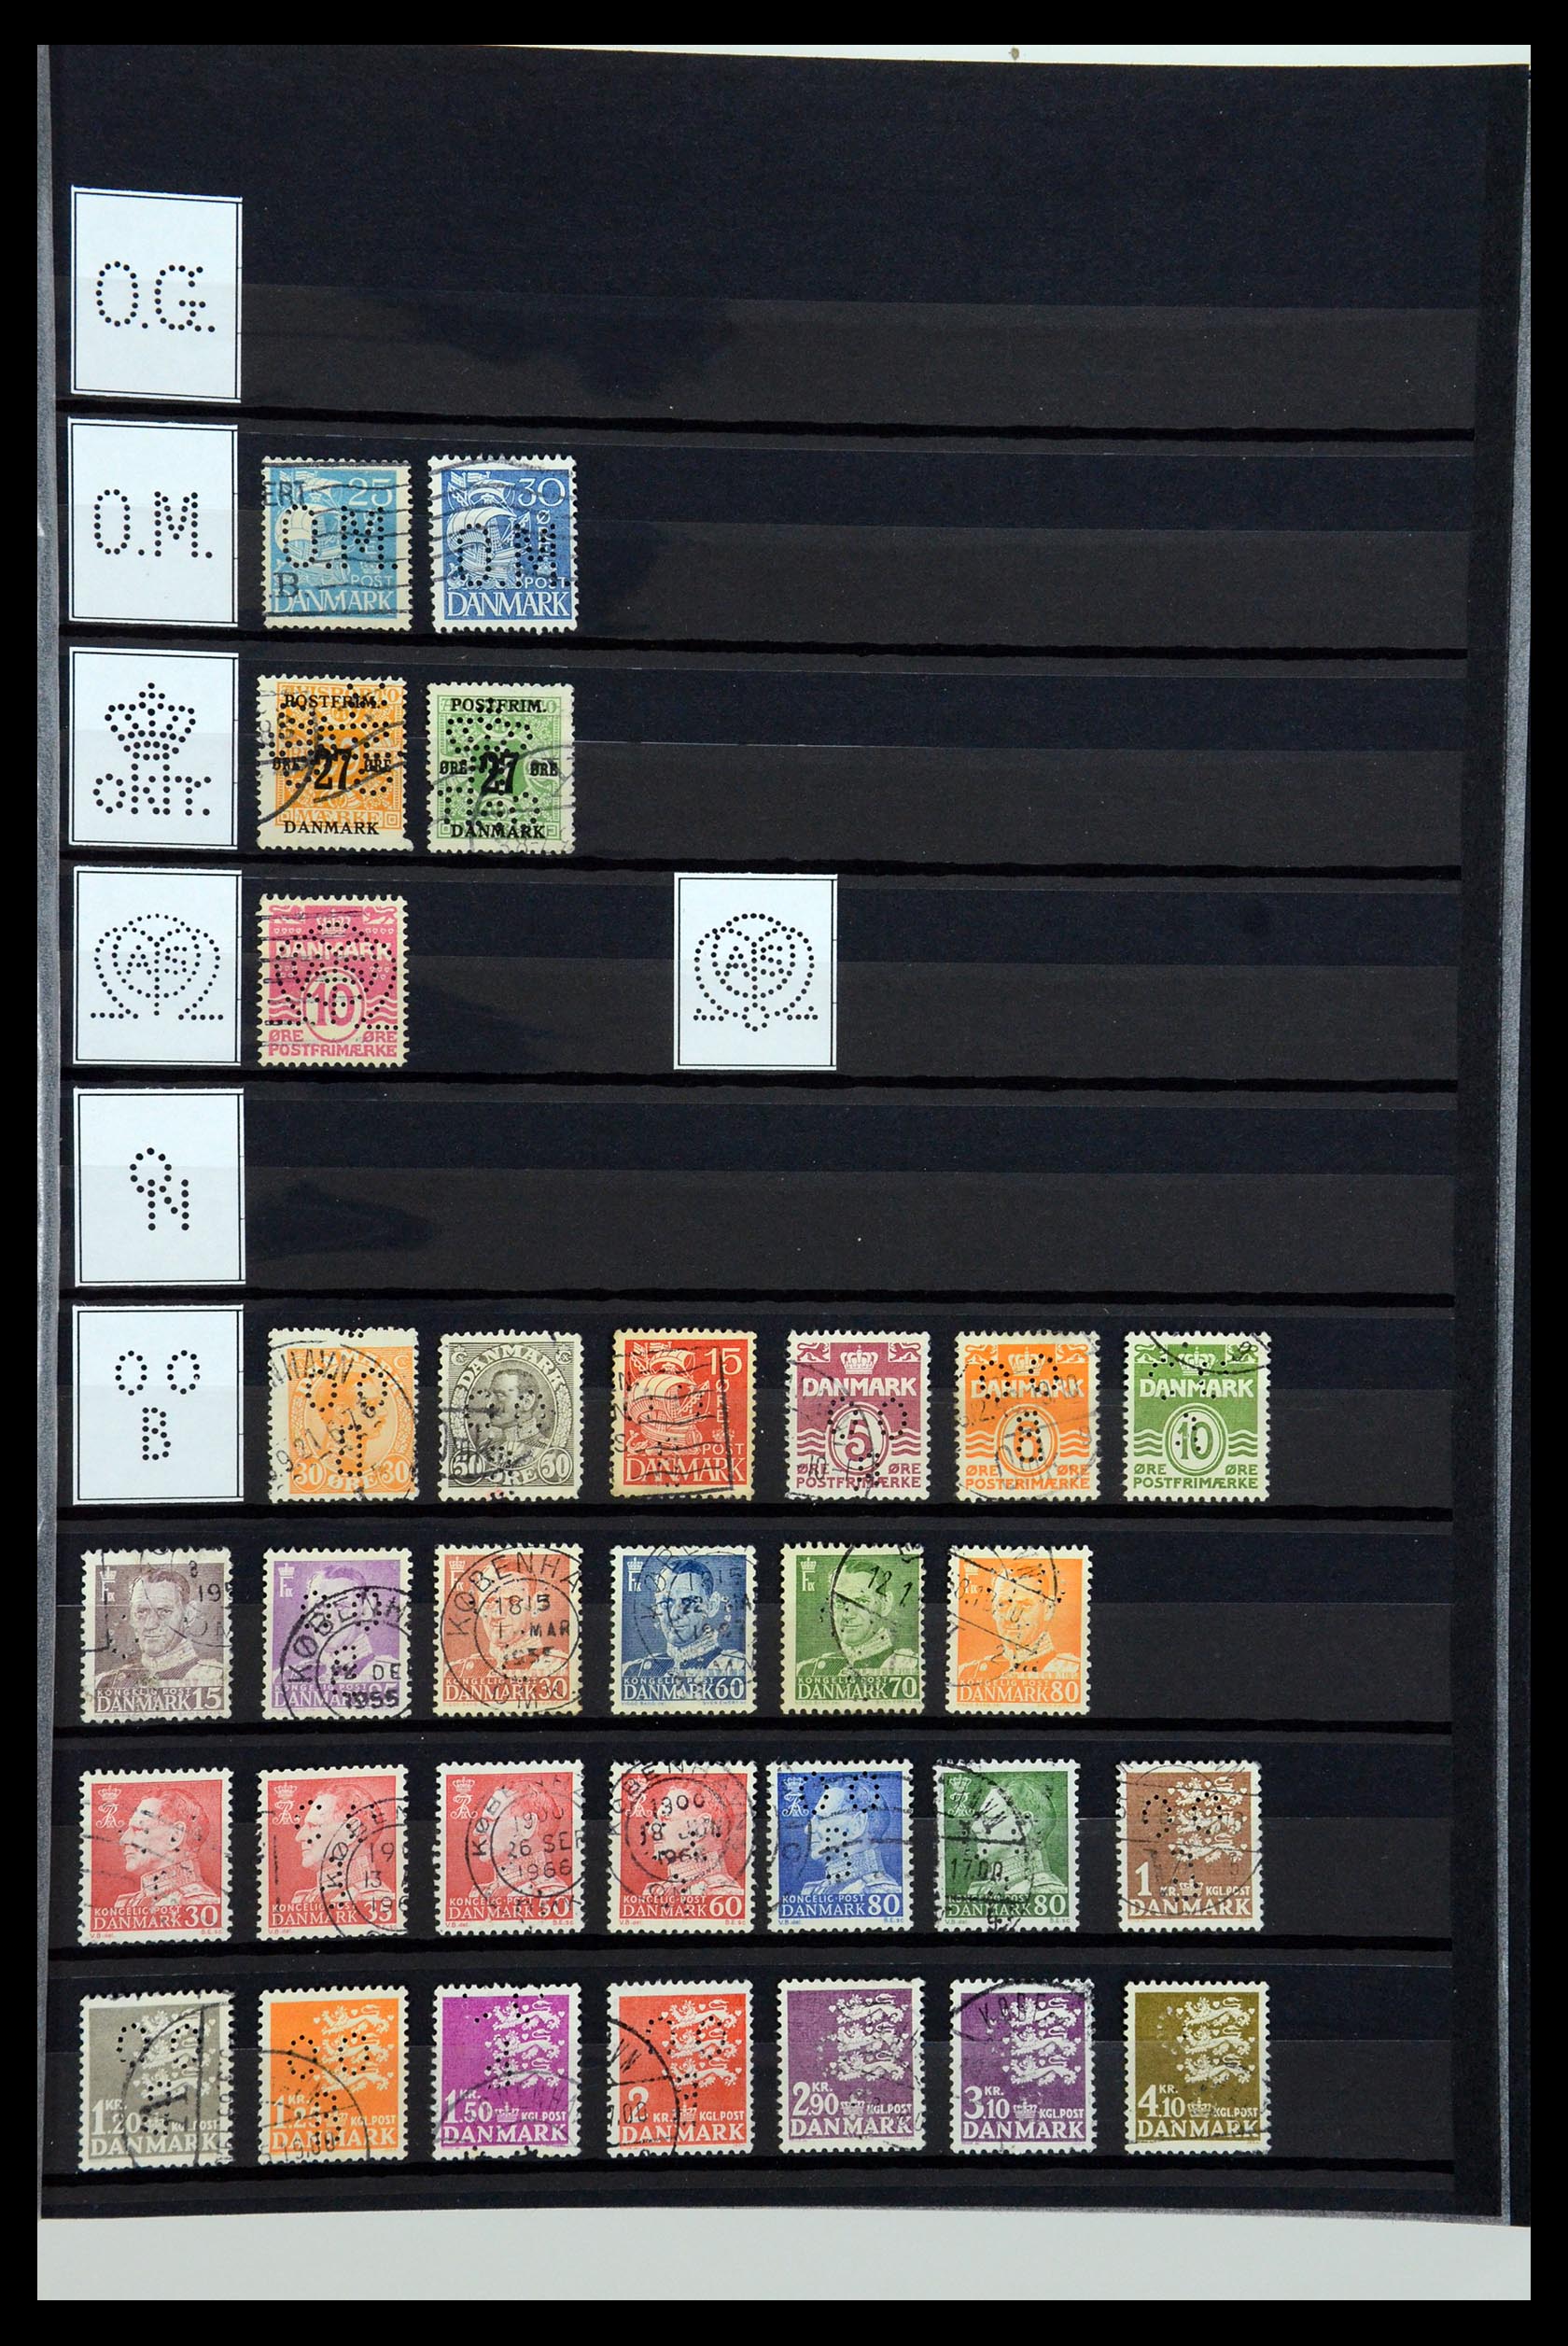 36396 186 - Stamp collection 36396 Denmark perfins.